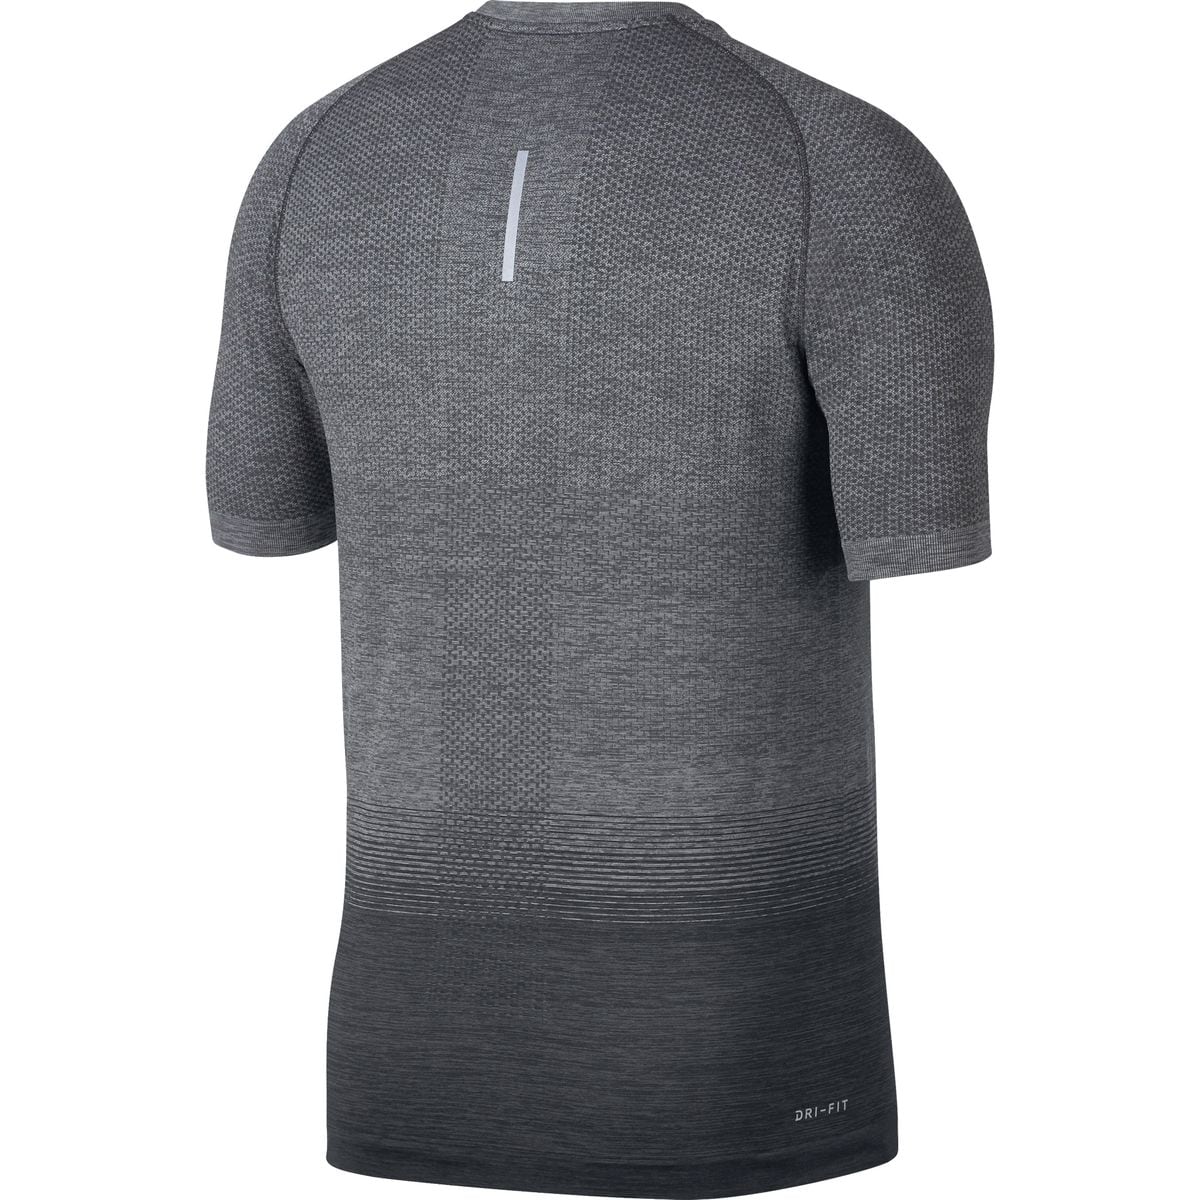 Nike Dri-FIT Top - - Clothing